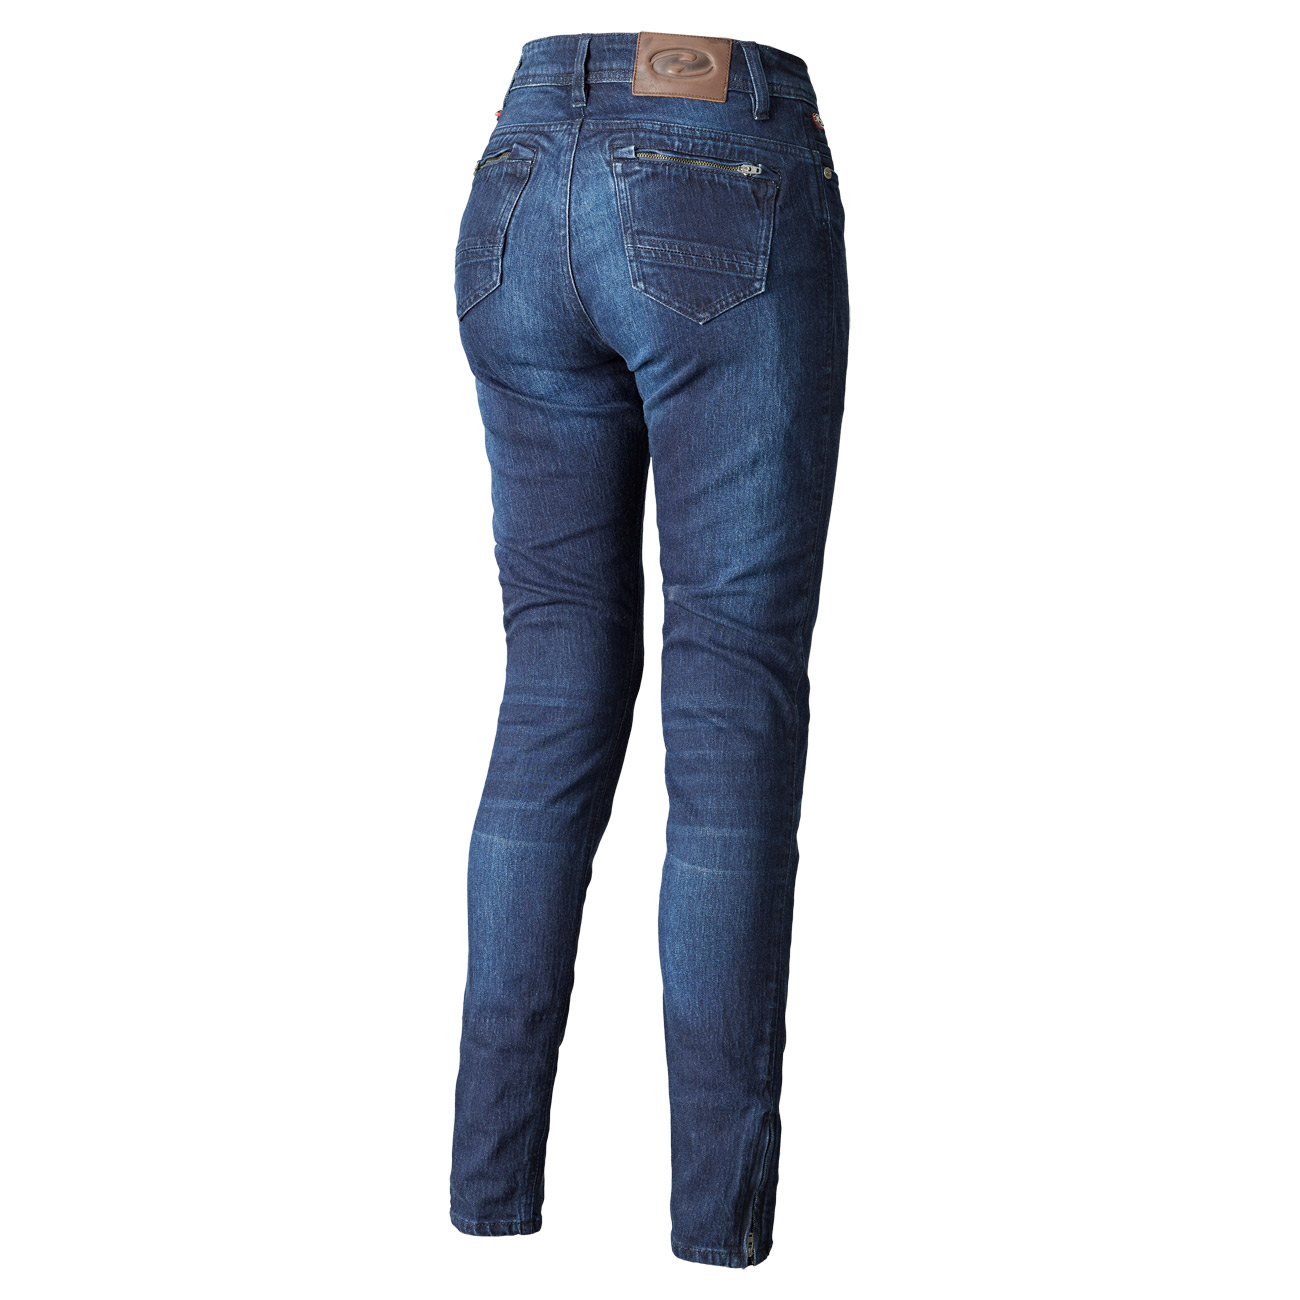 Scorge WMS Ladies Biker jeans 